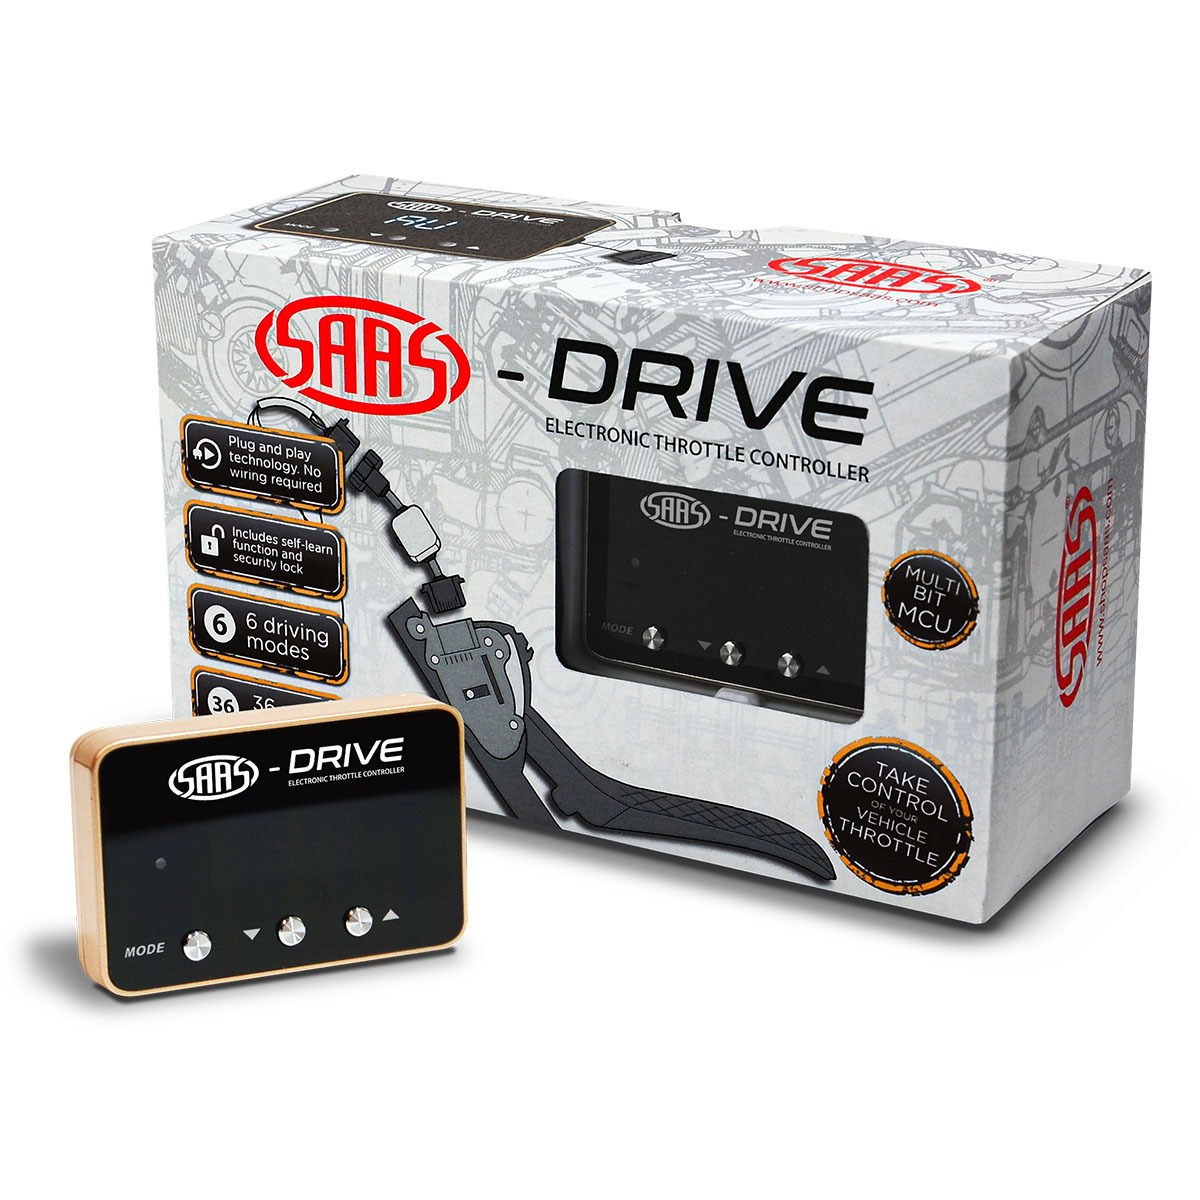 SAAS-Drive Toyota Hilux 7th Gen N70 2004 - 2015 Throttle Controller 